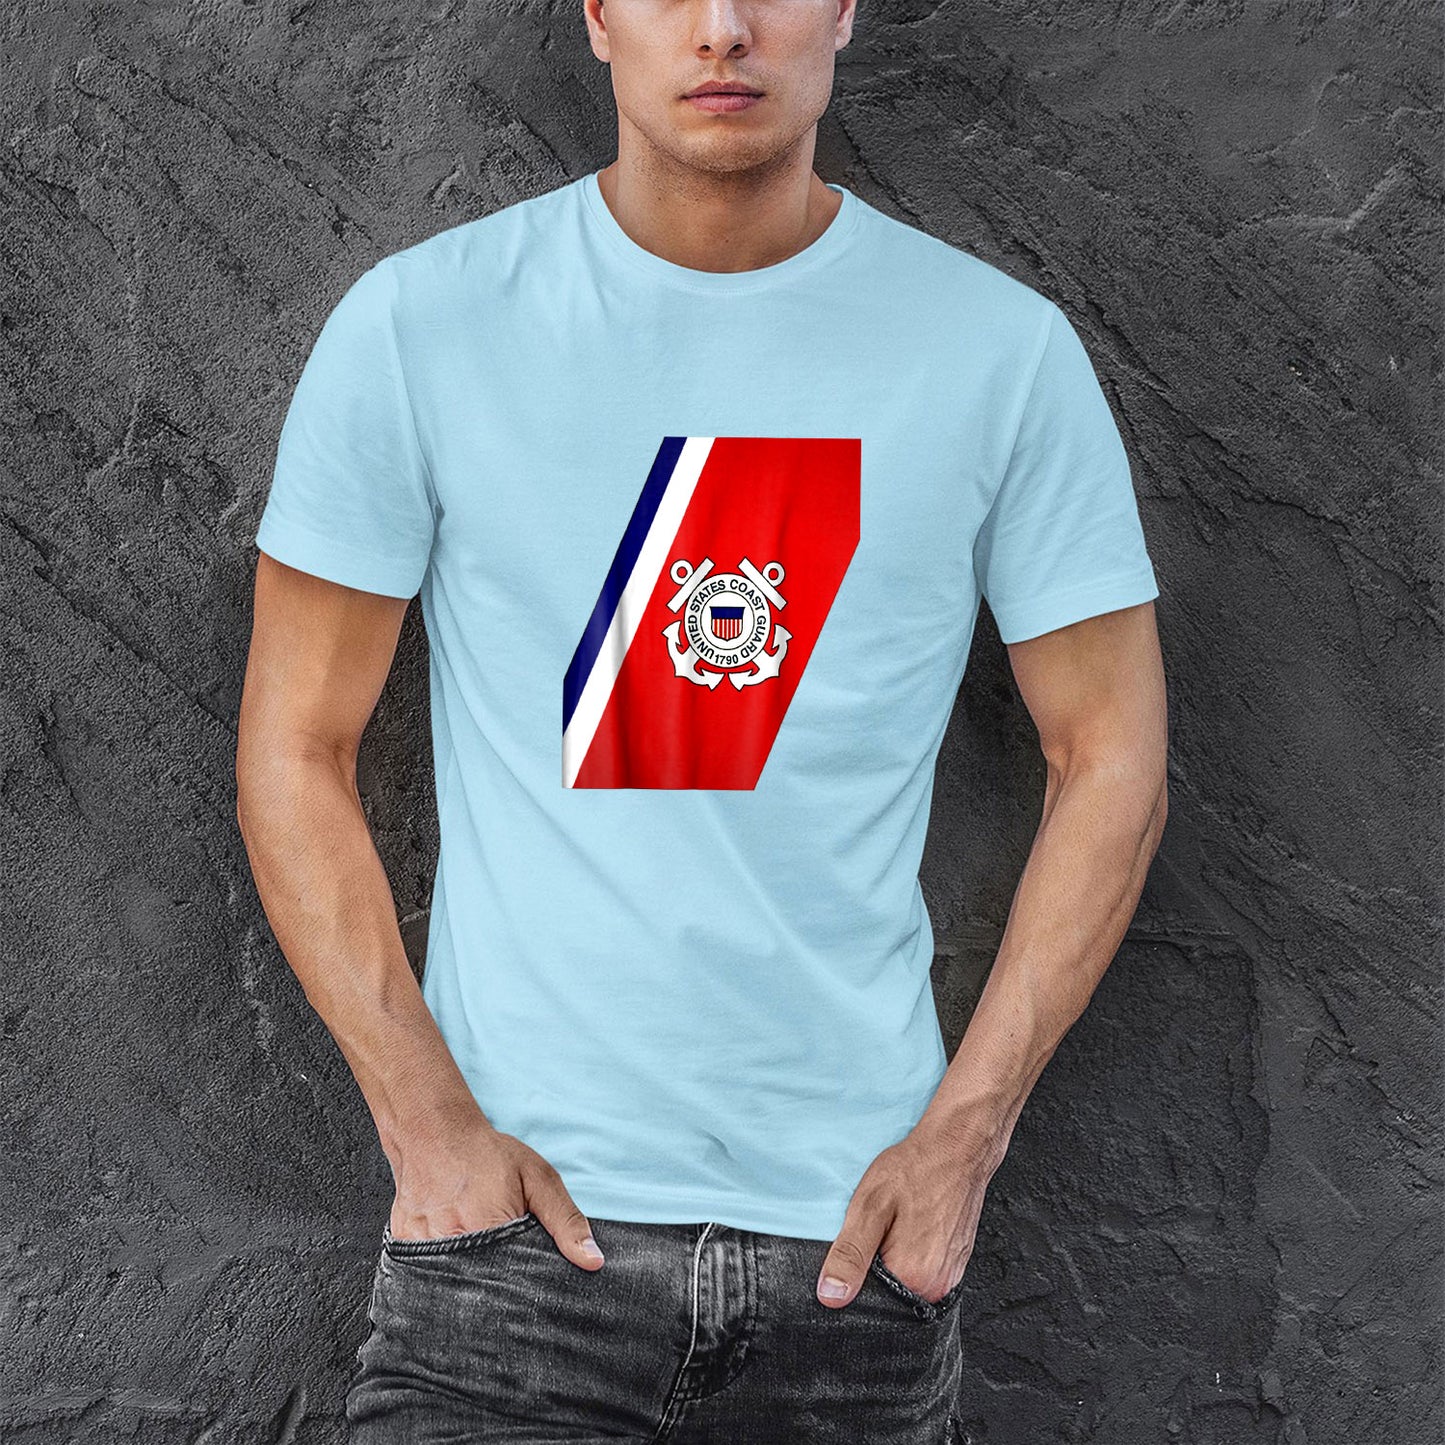 Memorial Day 2021 Uscg Tee Shirts, US Coast Guard Original USCG logo Gift Shirt For Men, Cotton Shirt, Air Force Memorial Shirt, Usaf T Shirt